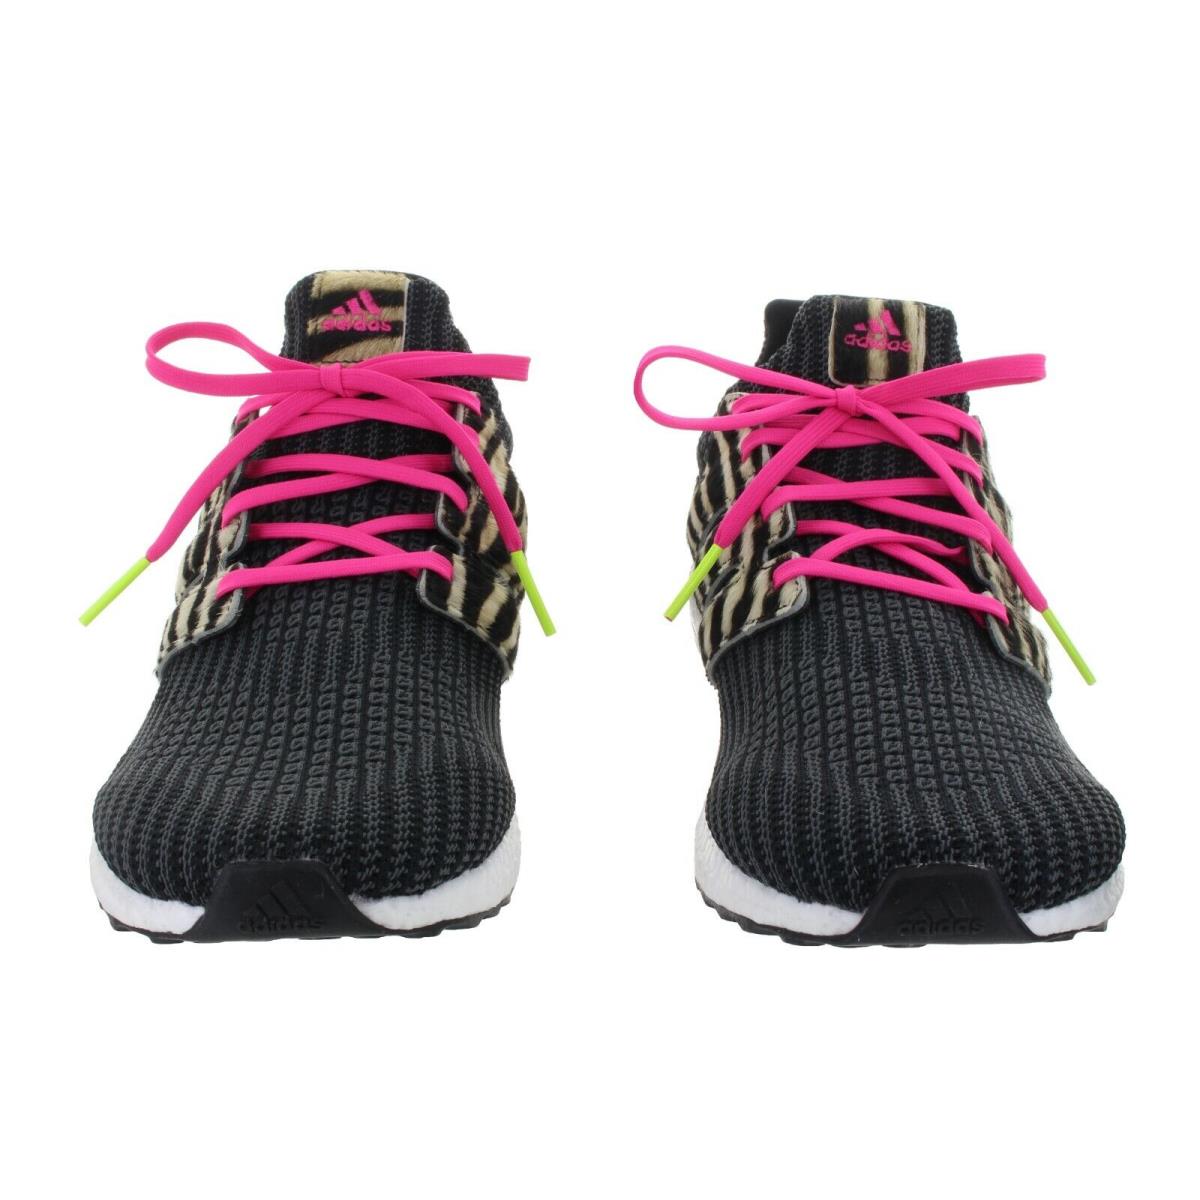 Adidas shoes UltraBoost DNA Zebra - Core Black, Cloud White, Shock Pink 0